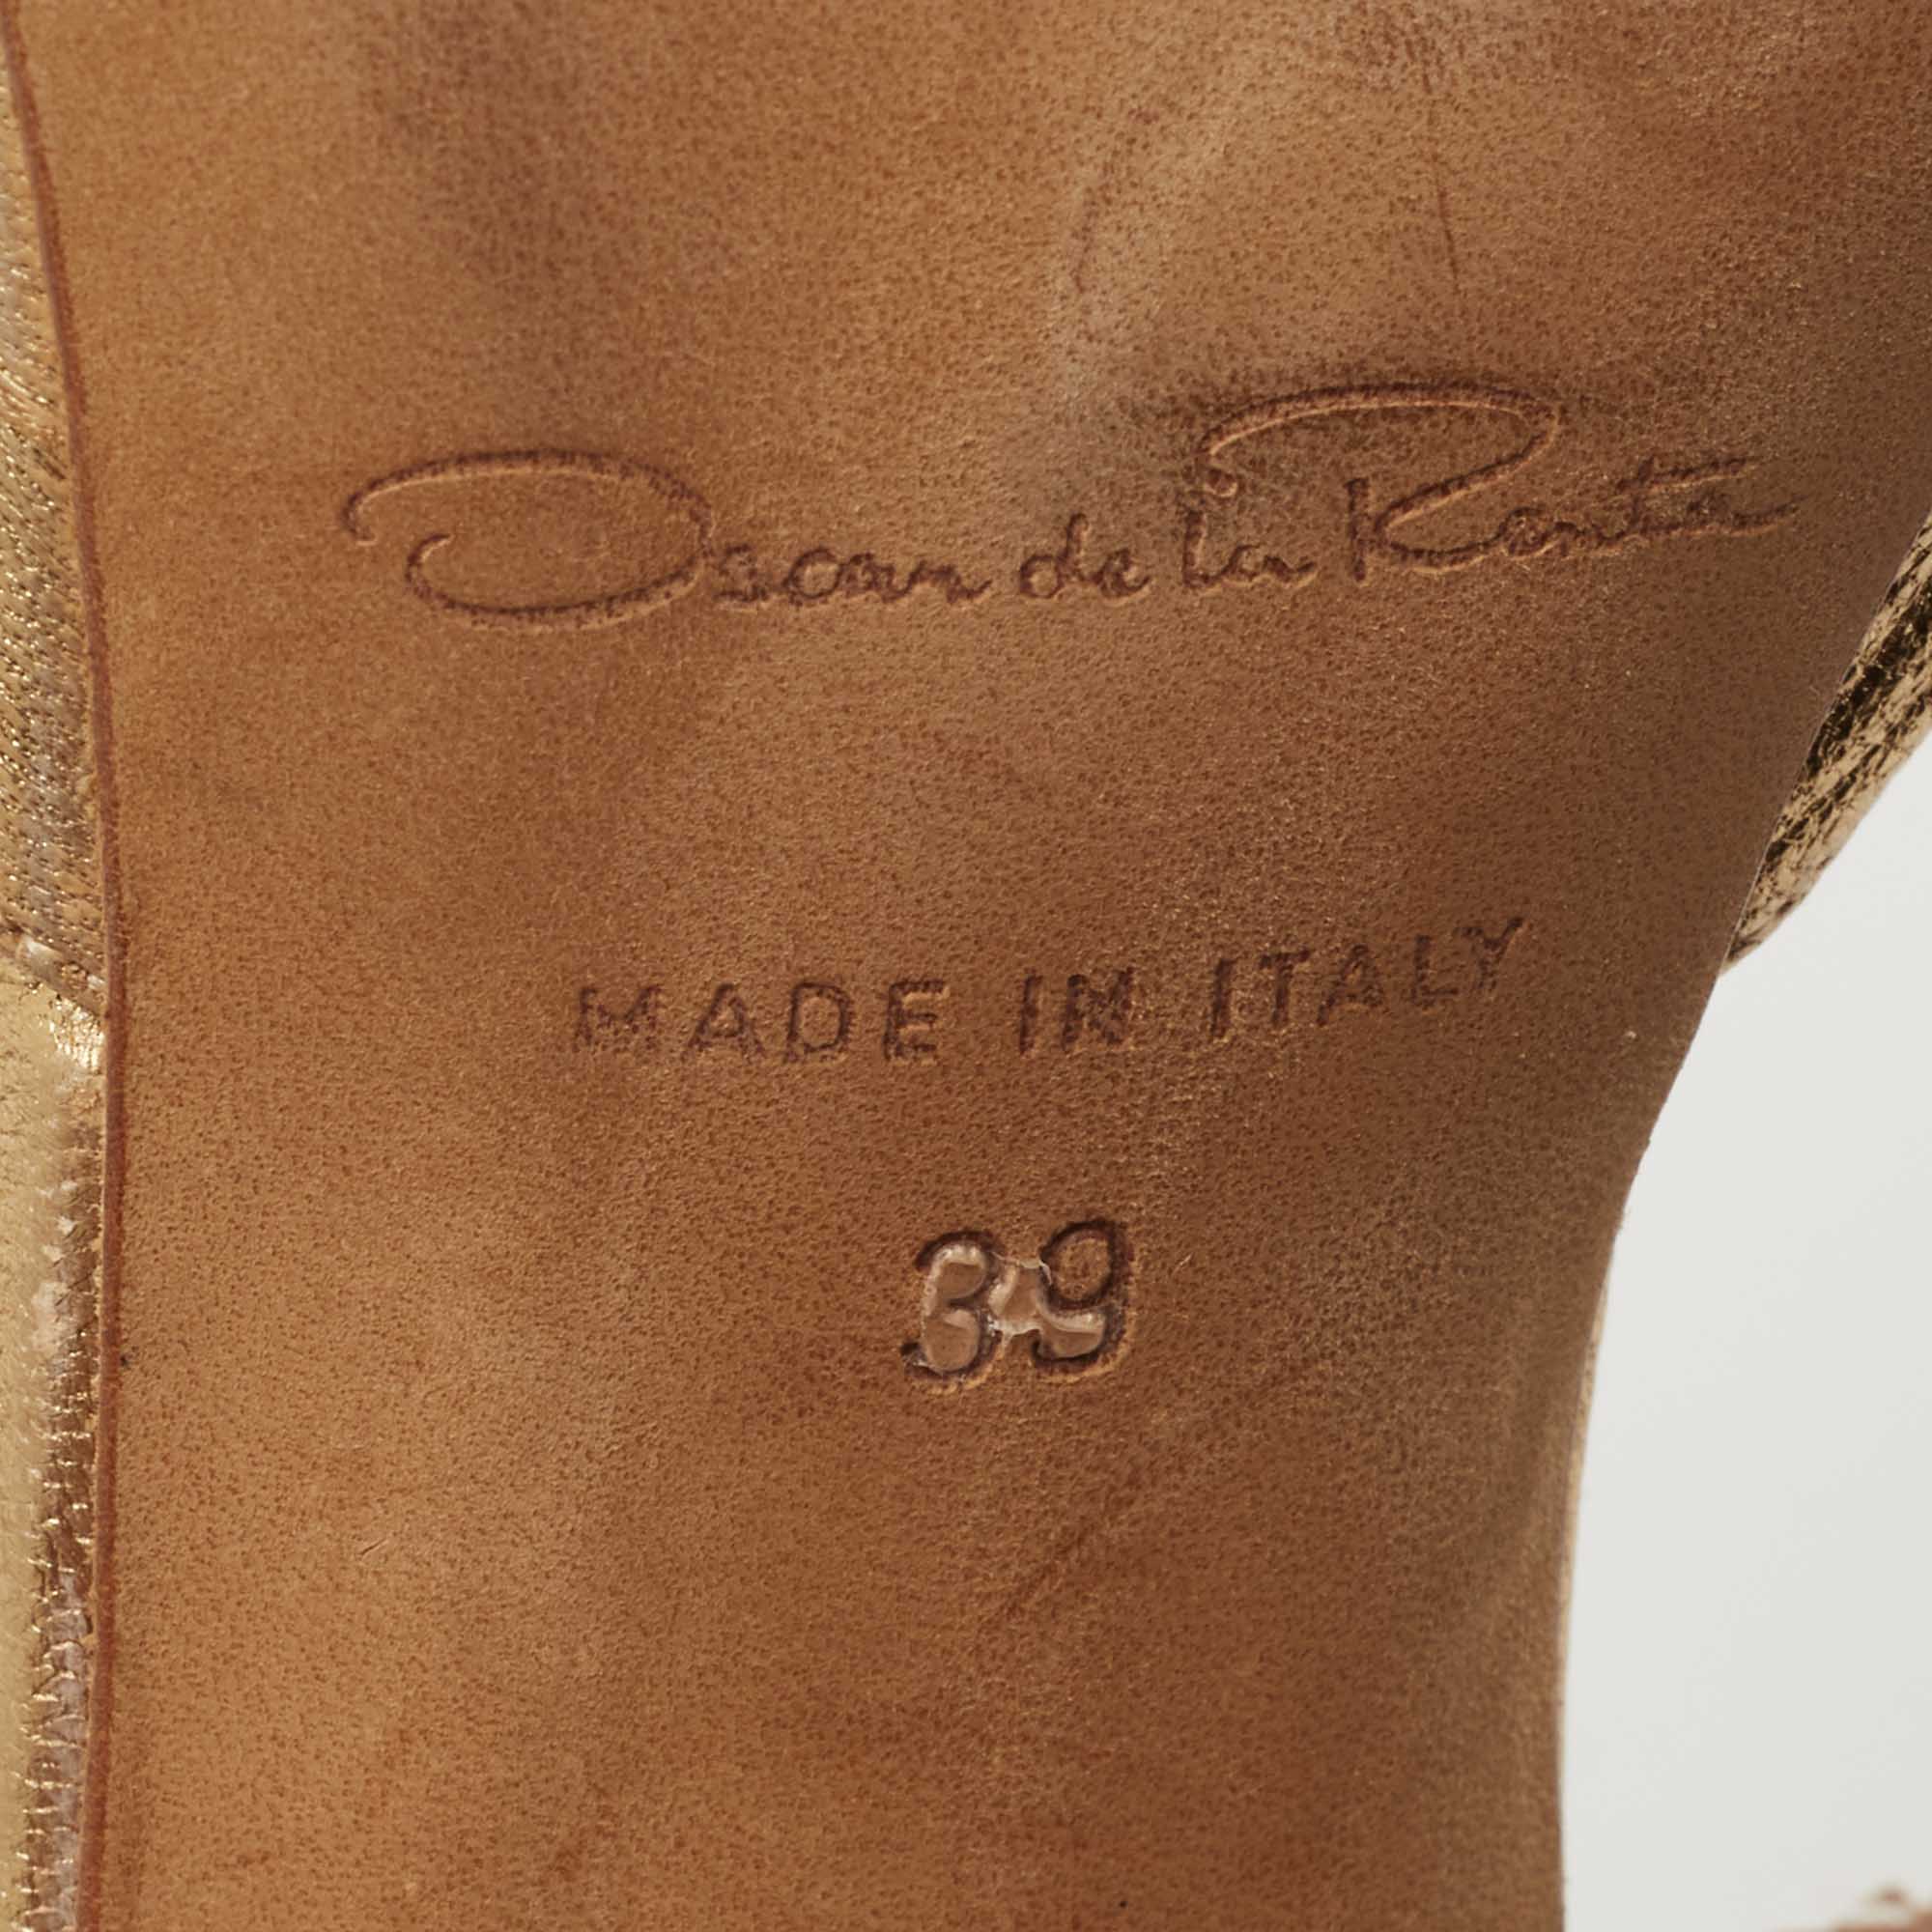 Oscar De La Renta Gold Leather Open Toe D'orsay Pumps Size 39